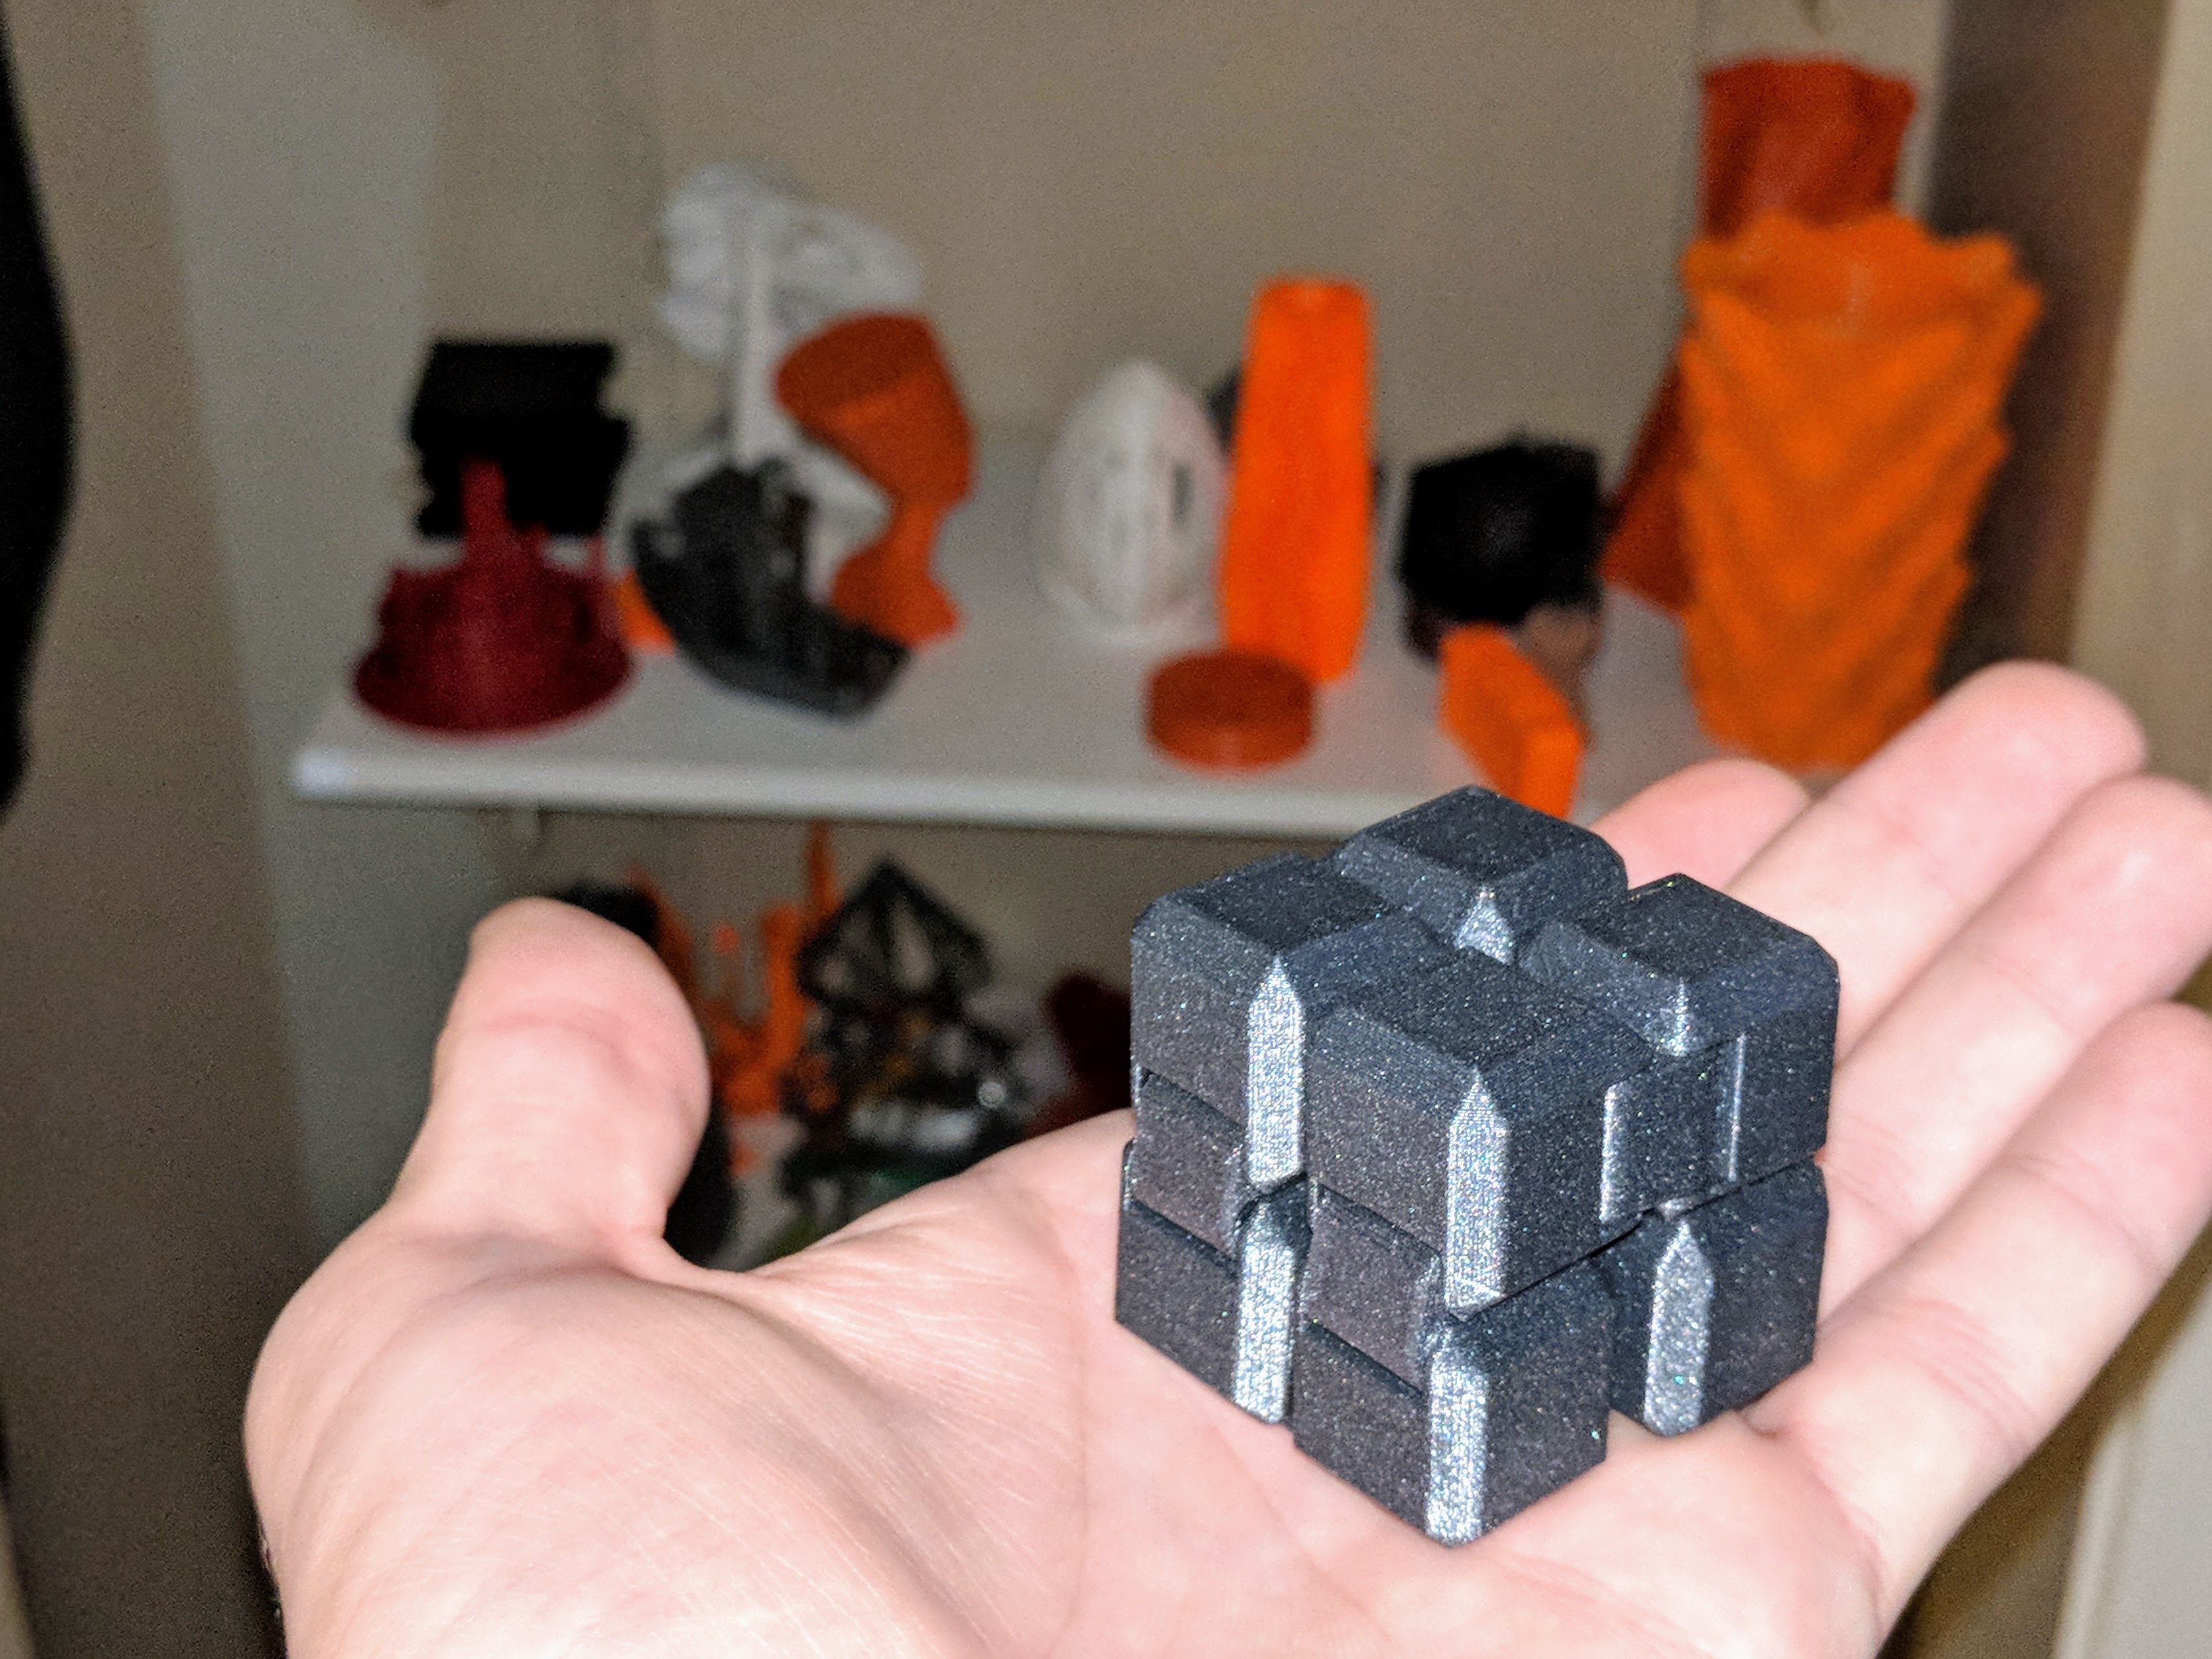 Infinity Cube – Fidget Toys Plus